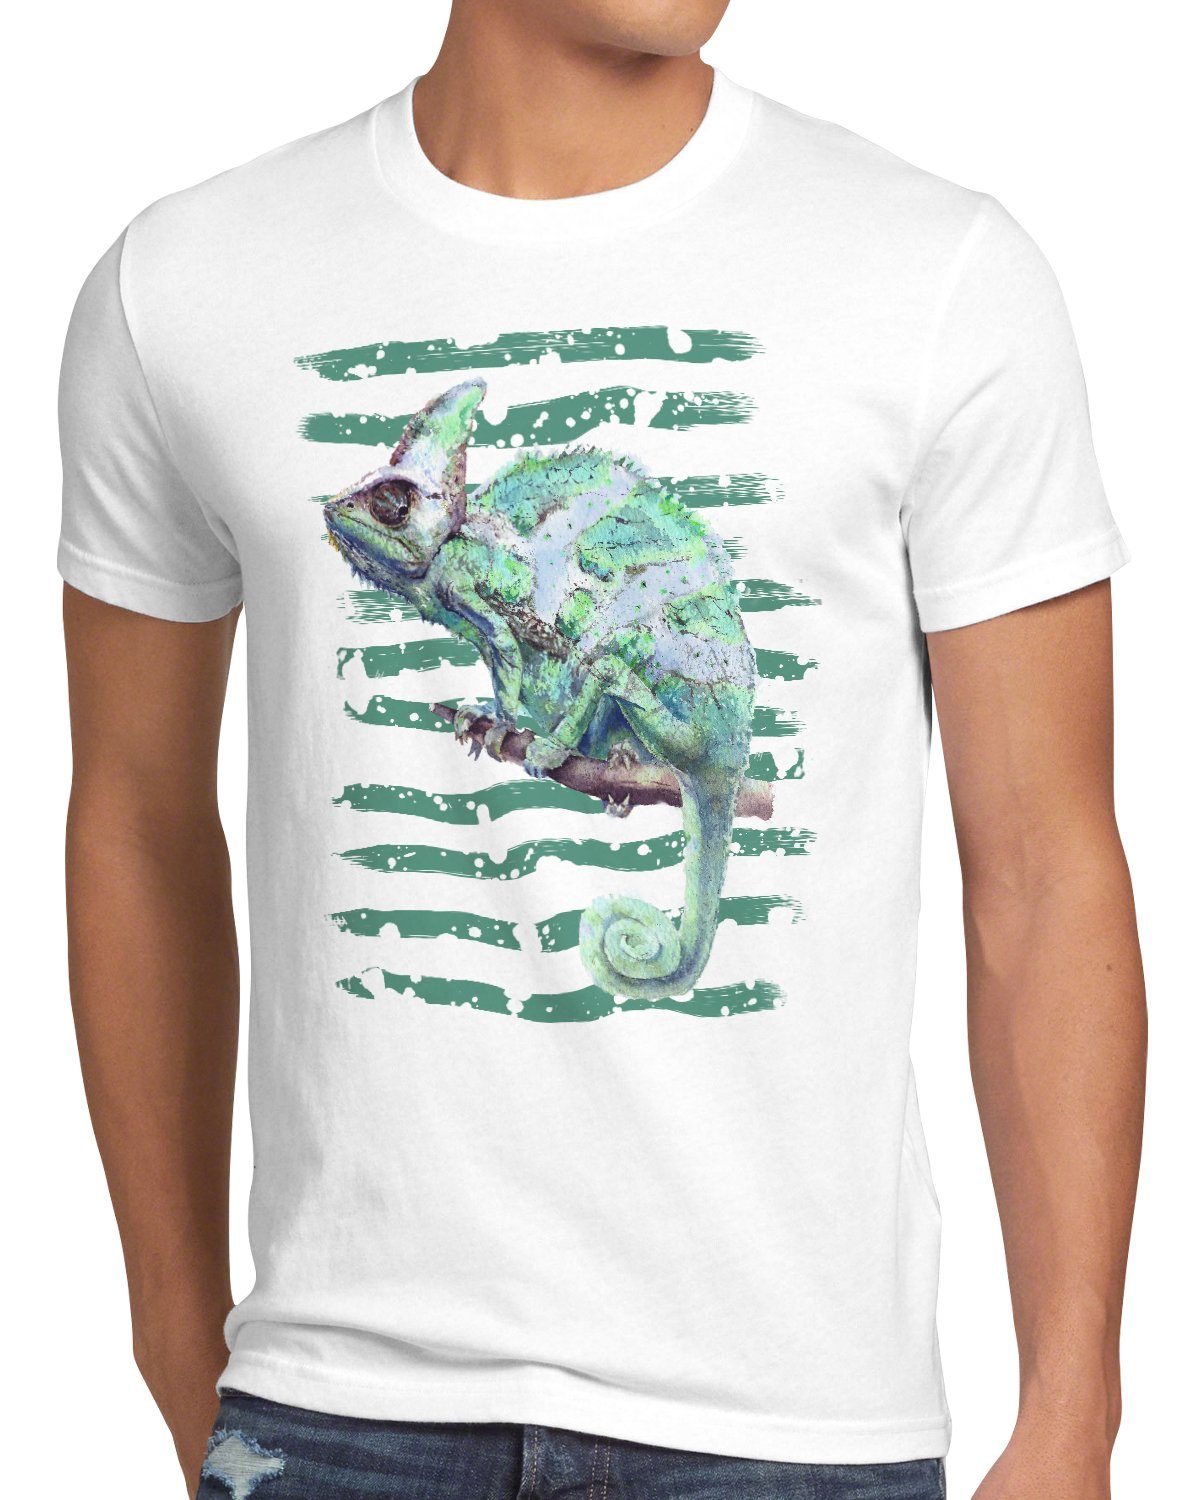 style3 Print-Shirt Herren T-Shirt Chamäleon reptil echse farbwechsel